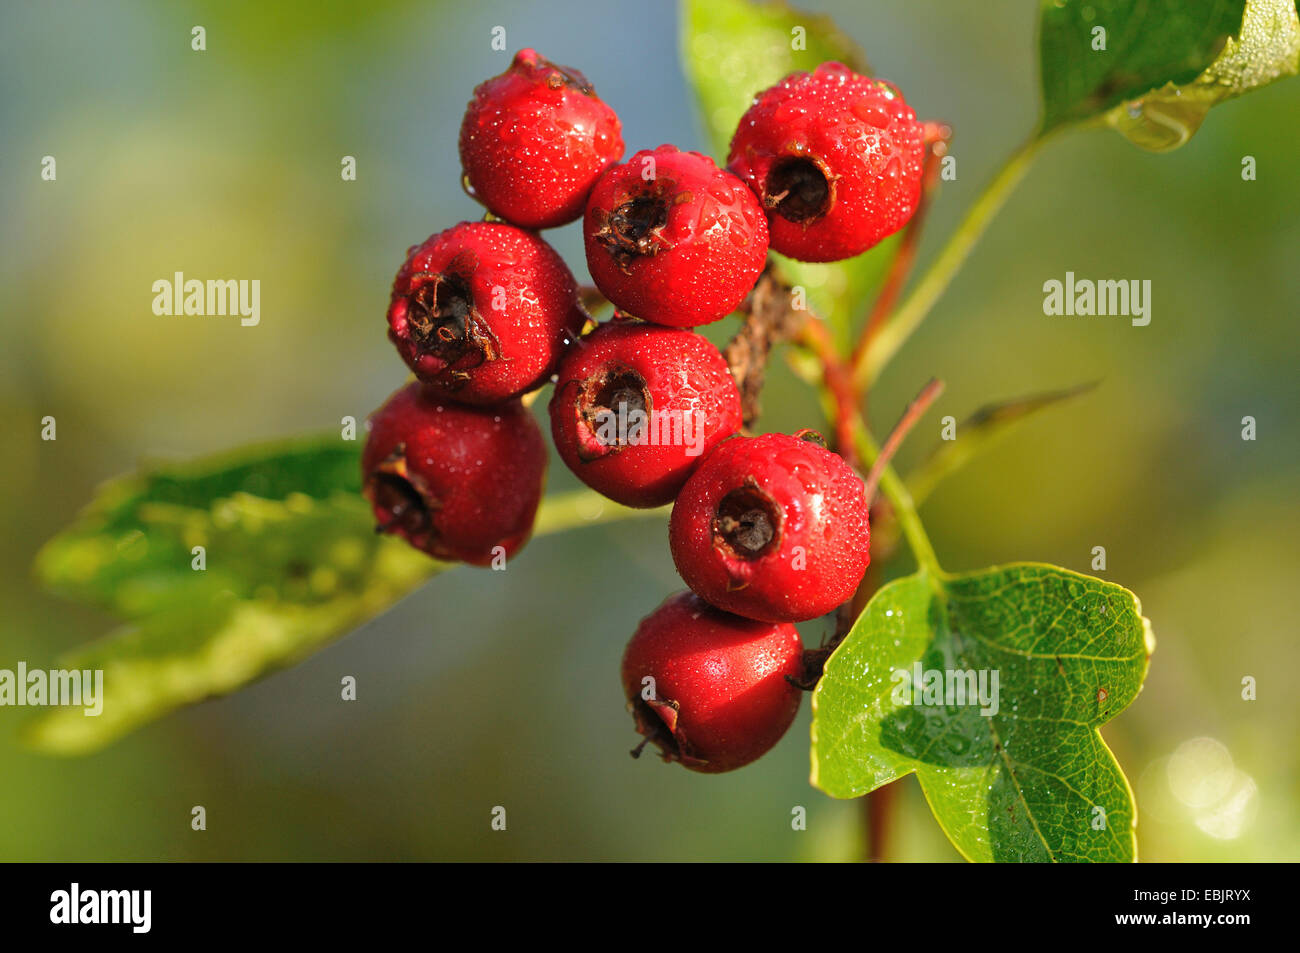 common hawthorn, singleseed hawthorn, English hawthorn (Crataegus monogyna), fruits with water drops, Germany Stock Photo